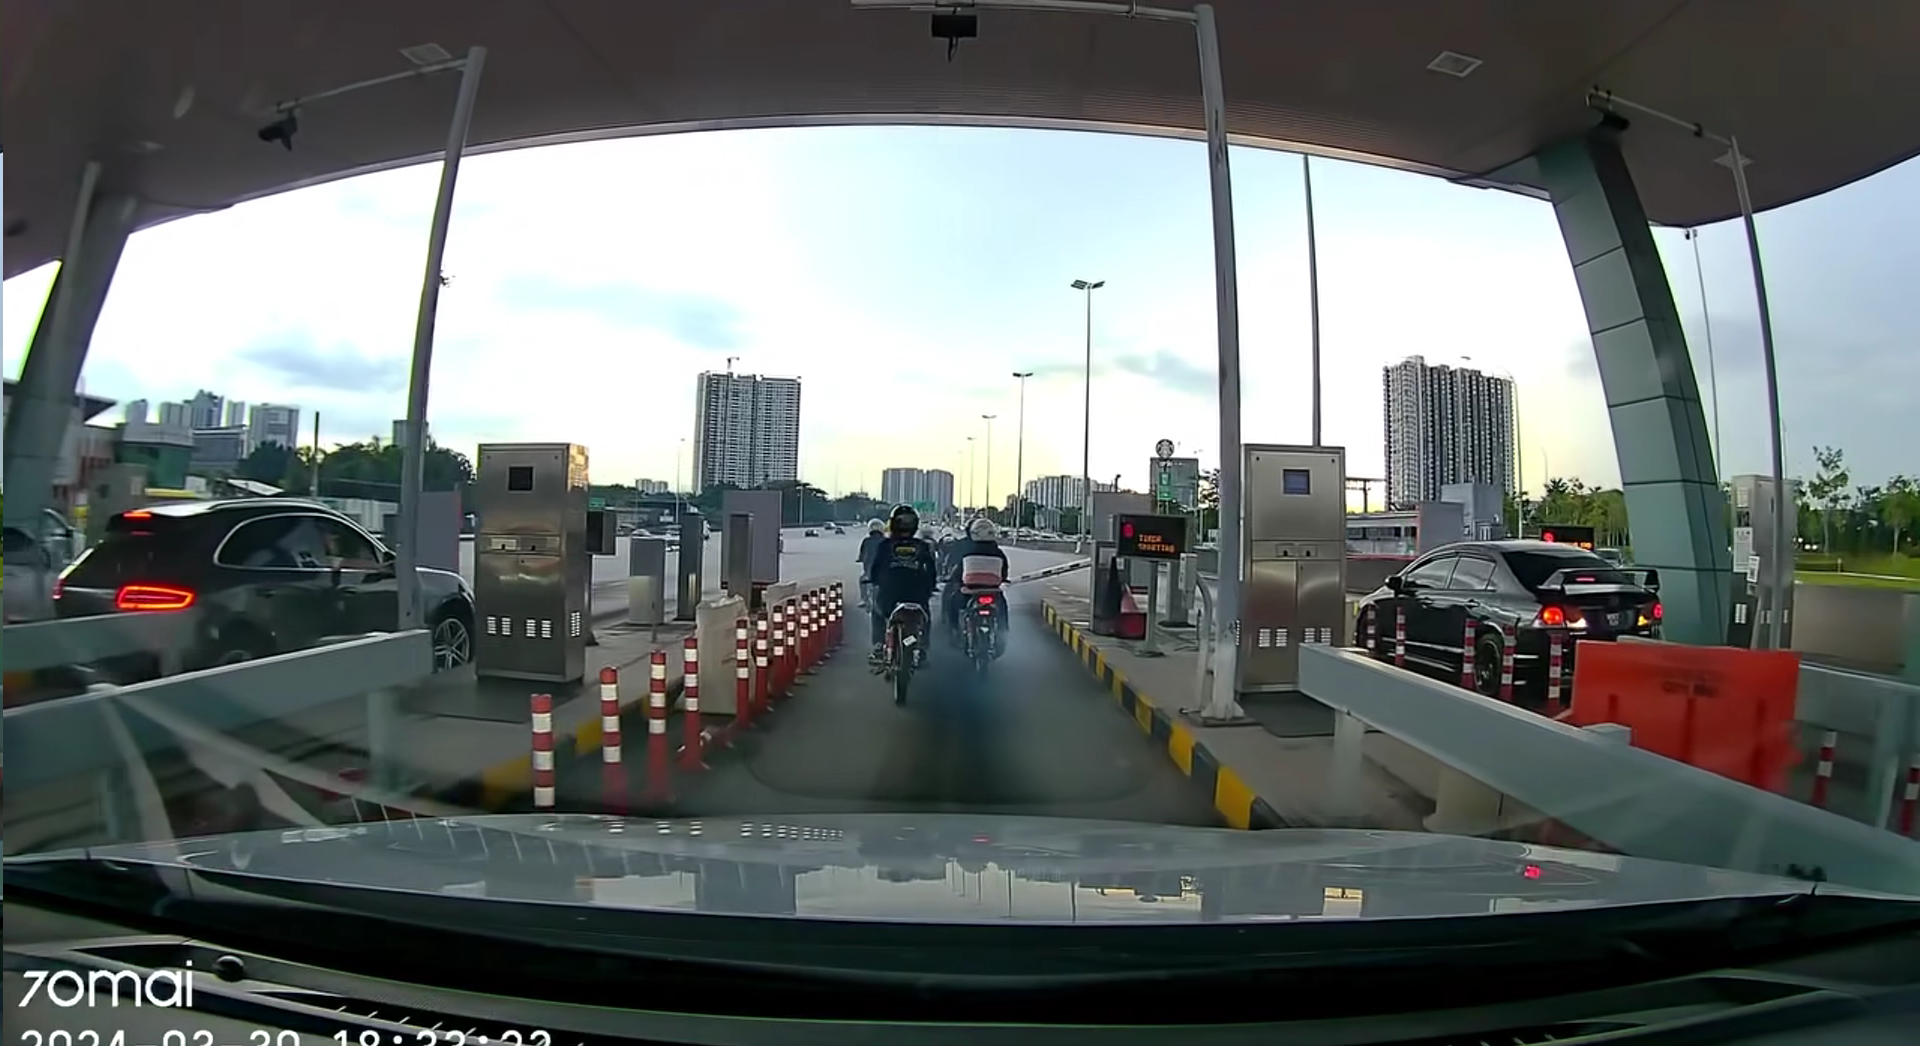 M'sian motorcyclists allegedly destroy toll boom gate before fleeing the scene | weirdkaya